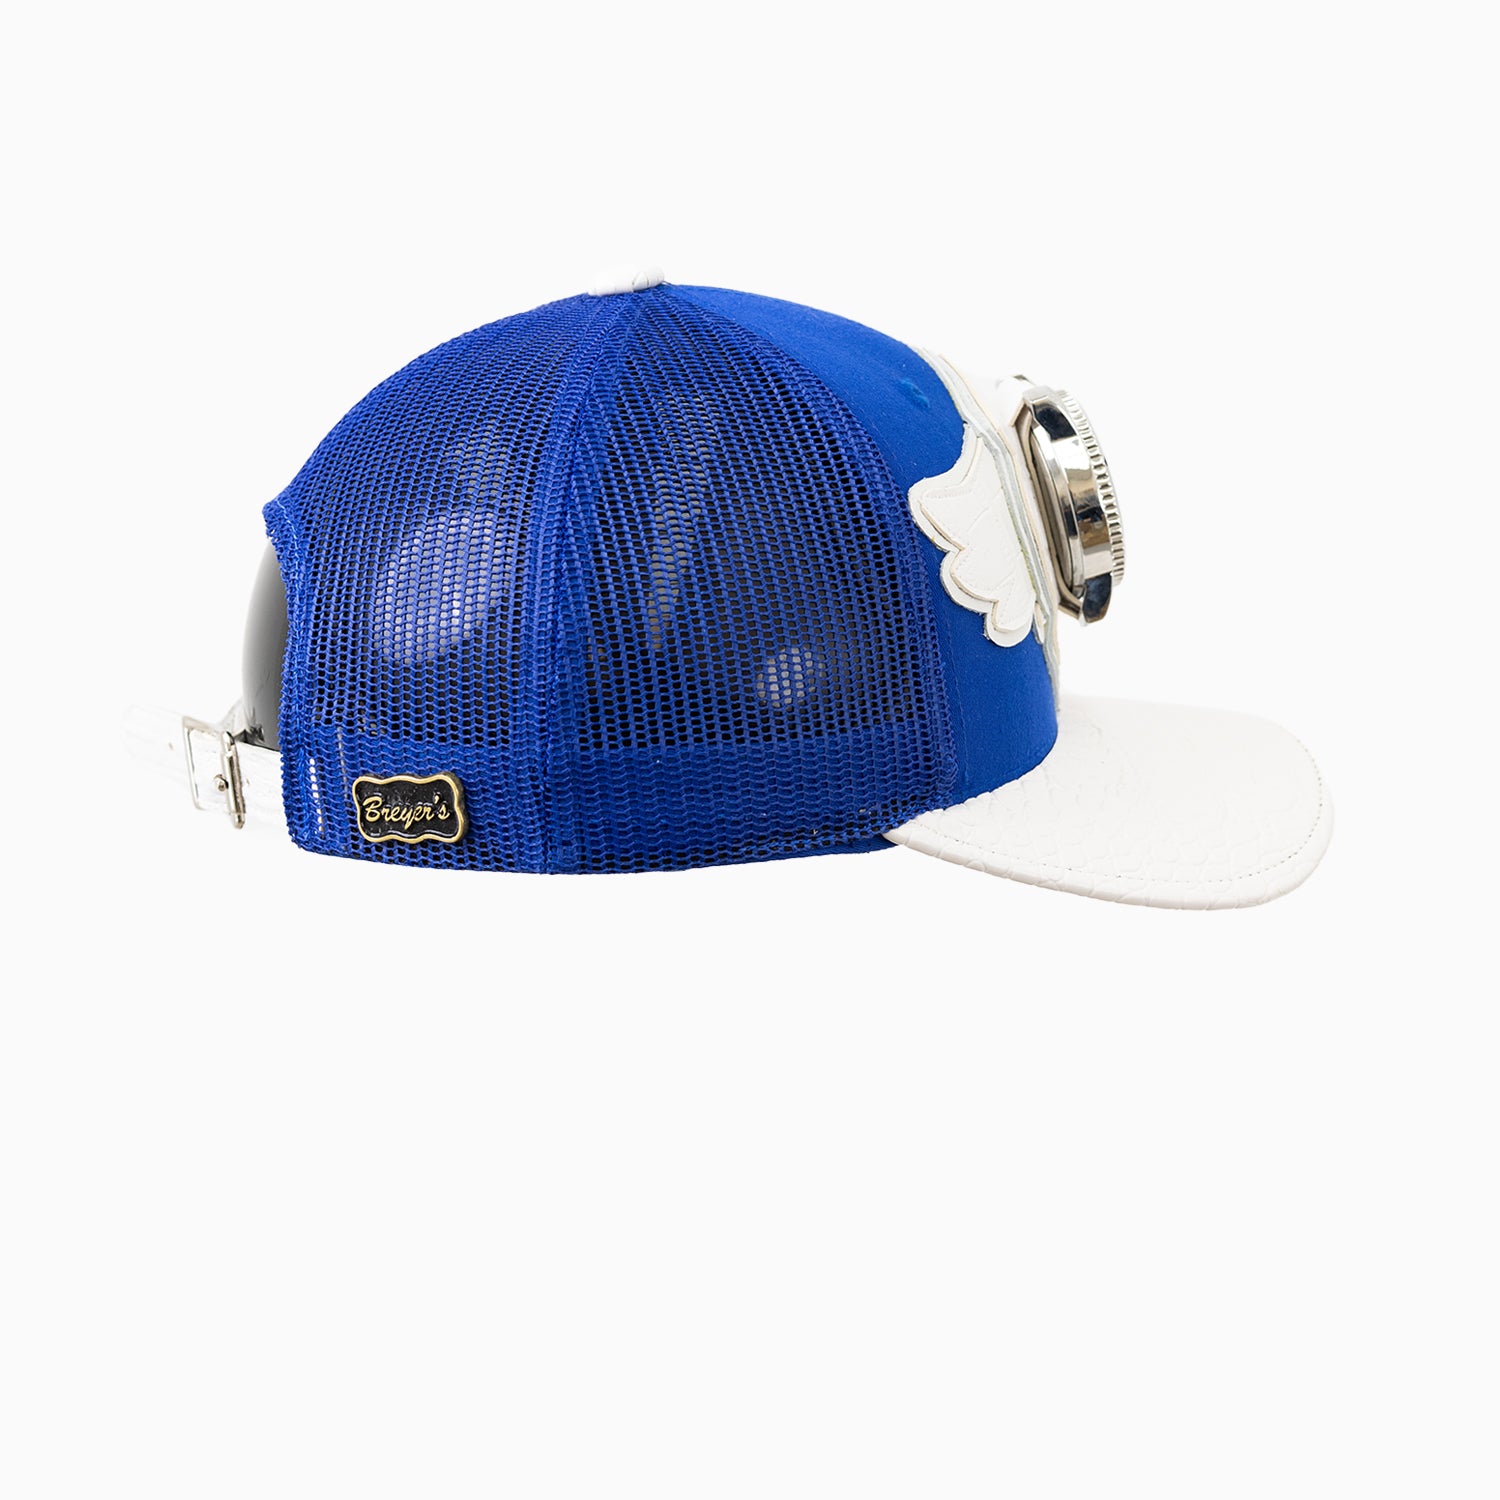 breyers-buck-50-wool-trucker-hat-with-leather-visor-breyers-twh-blue-wht